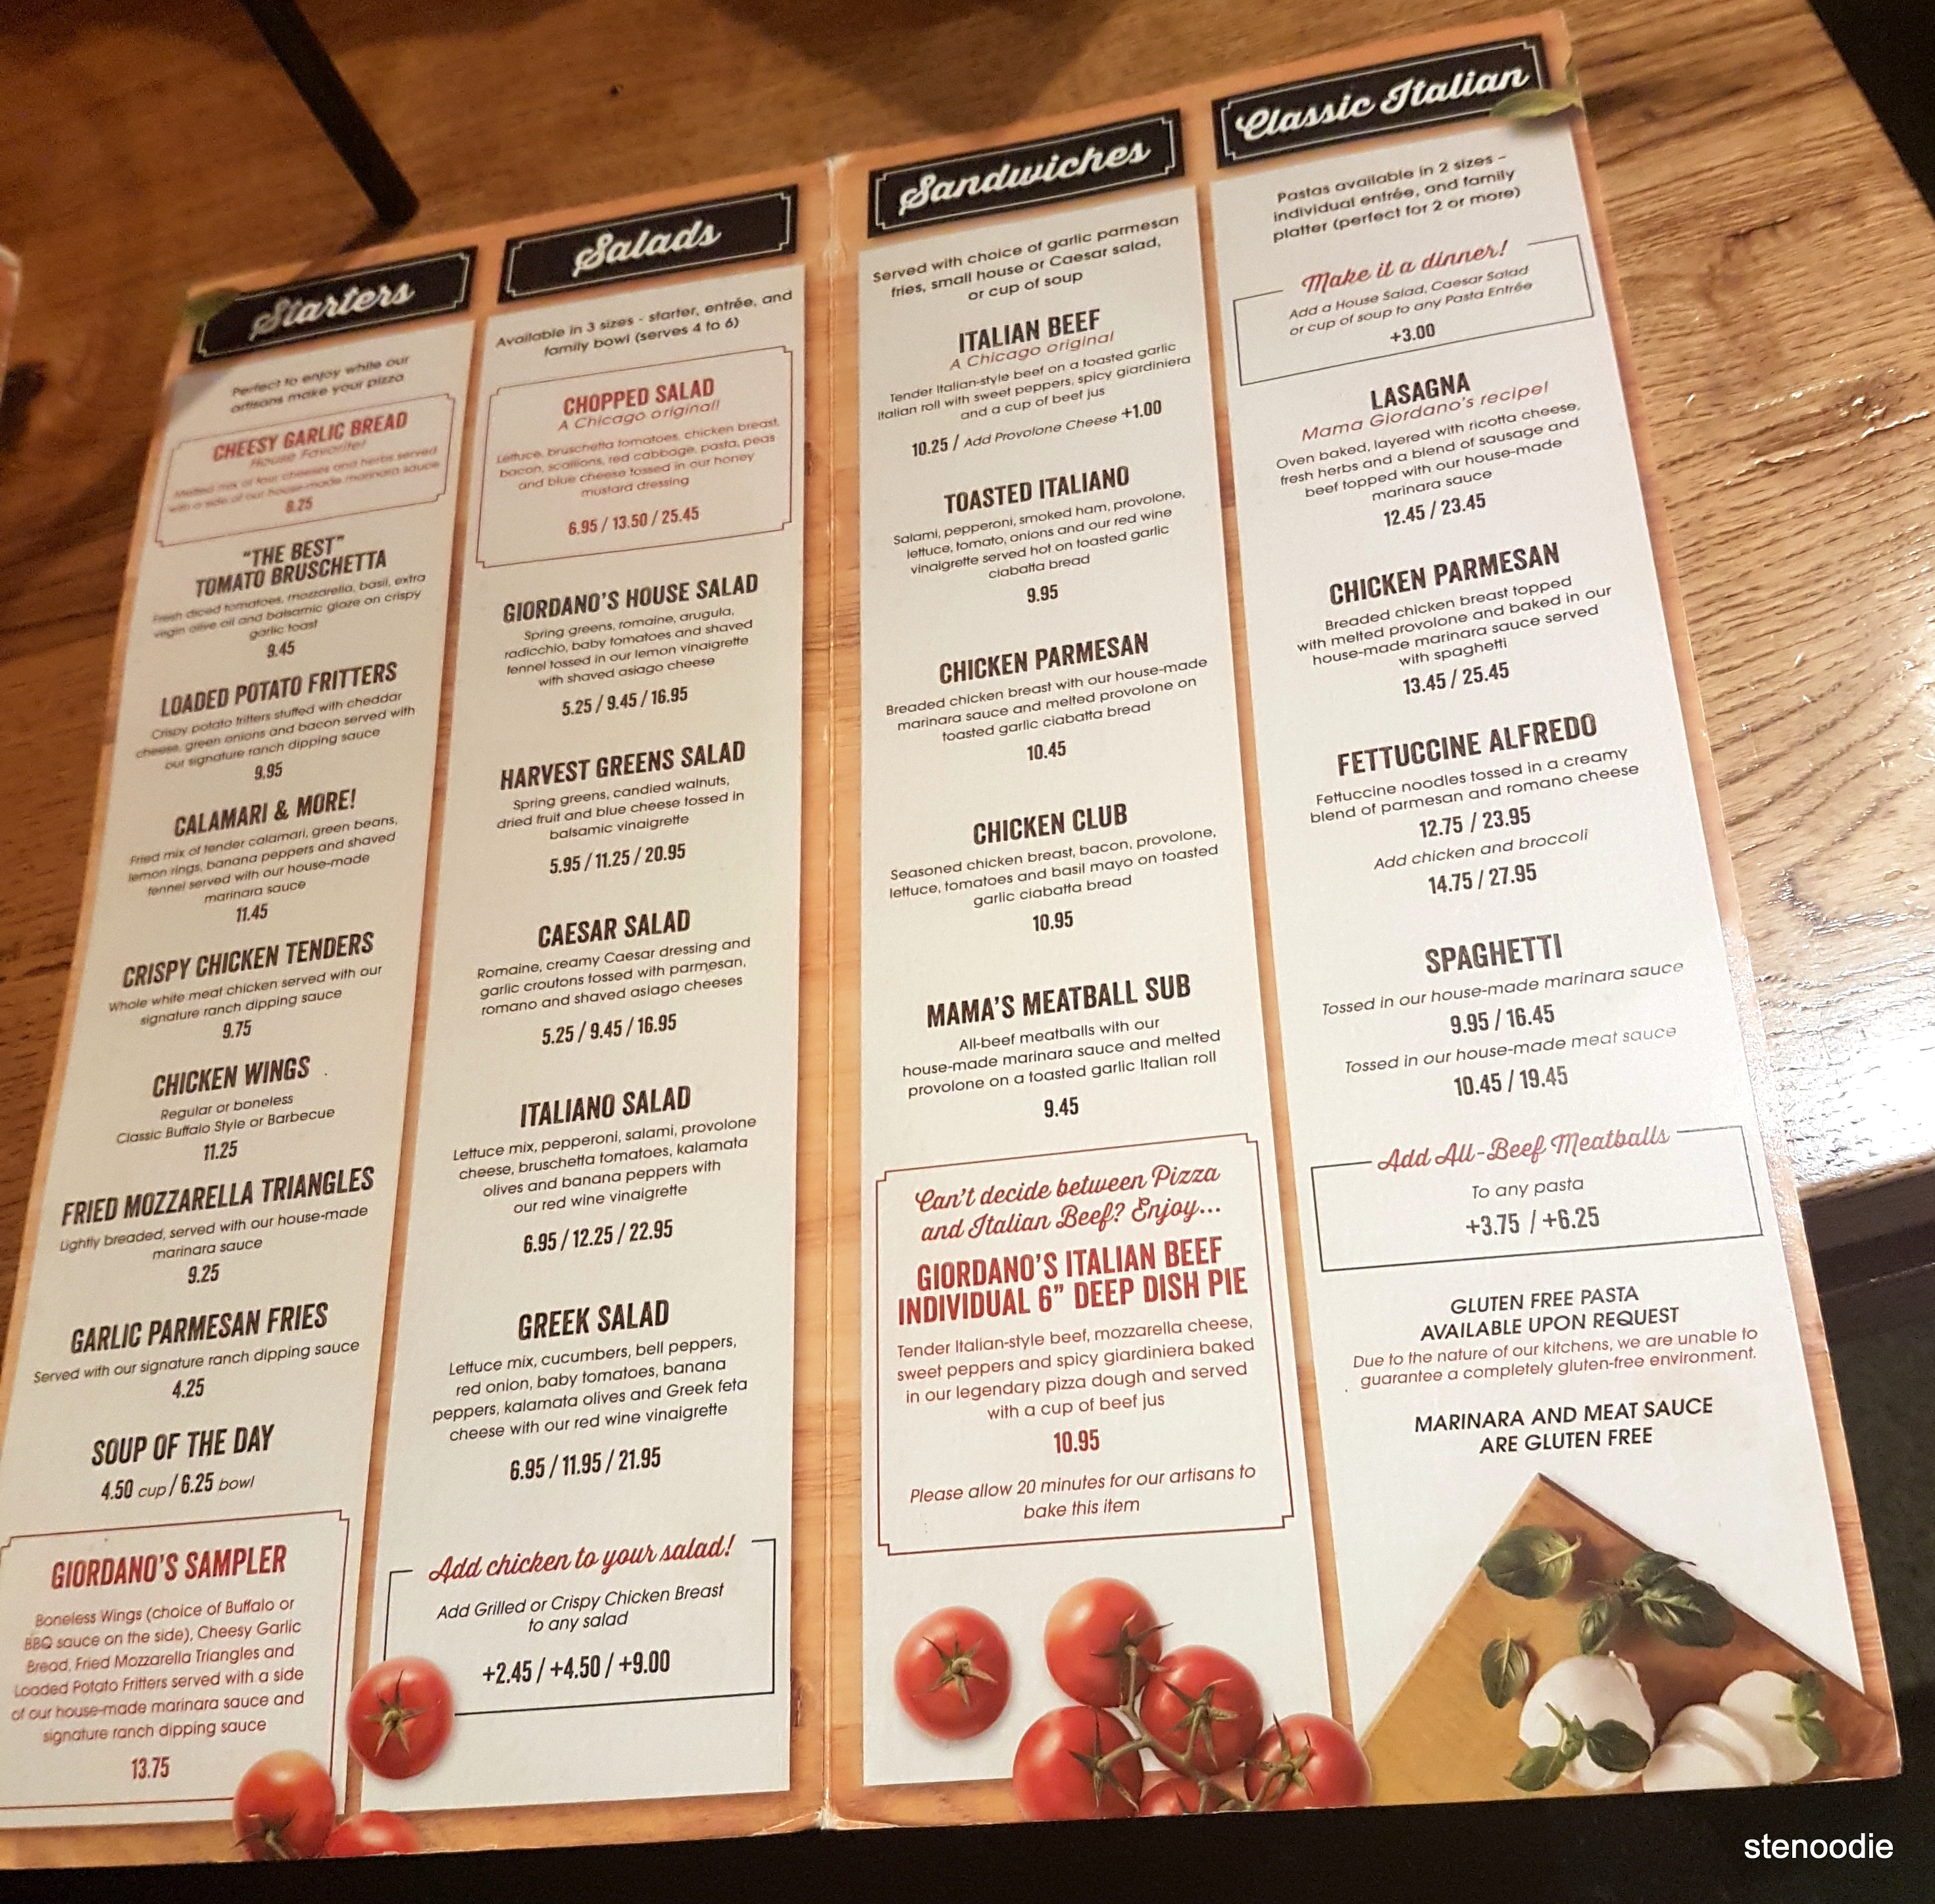 Giorando's menu and prices